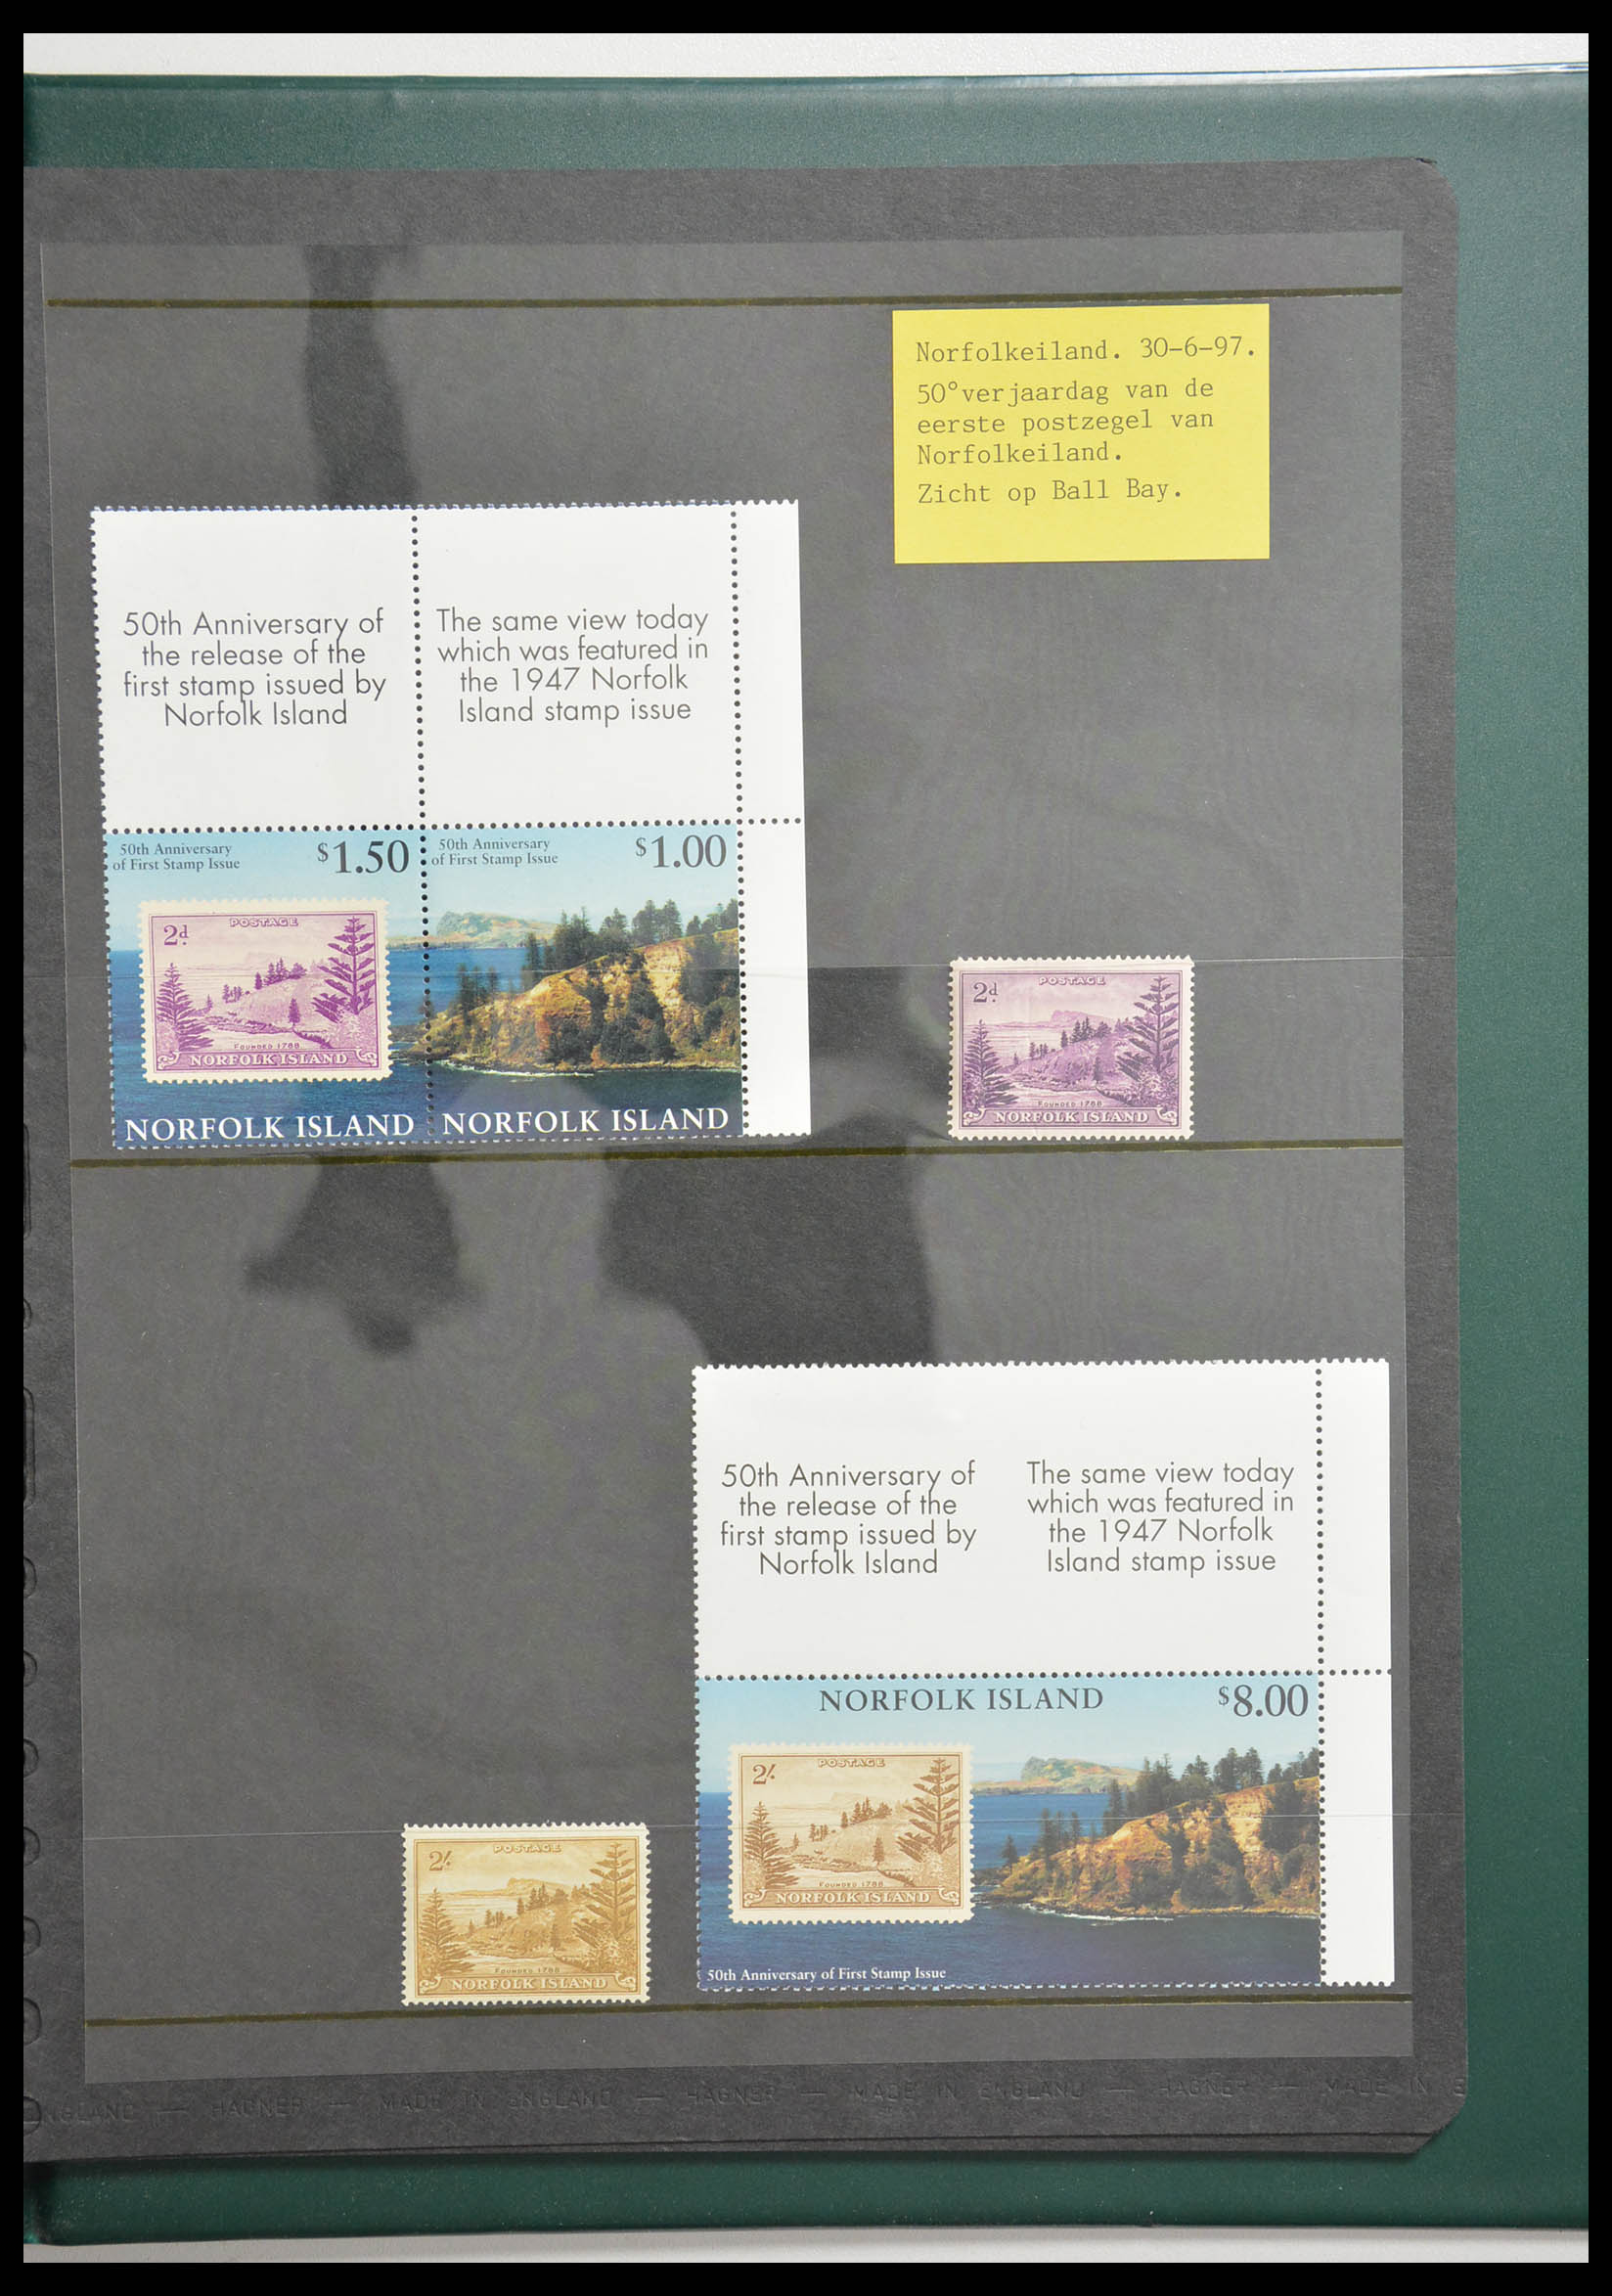 28337 089 - 28337 Postzegel op postzegel 1840-2001.